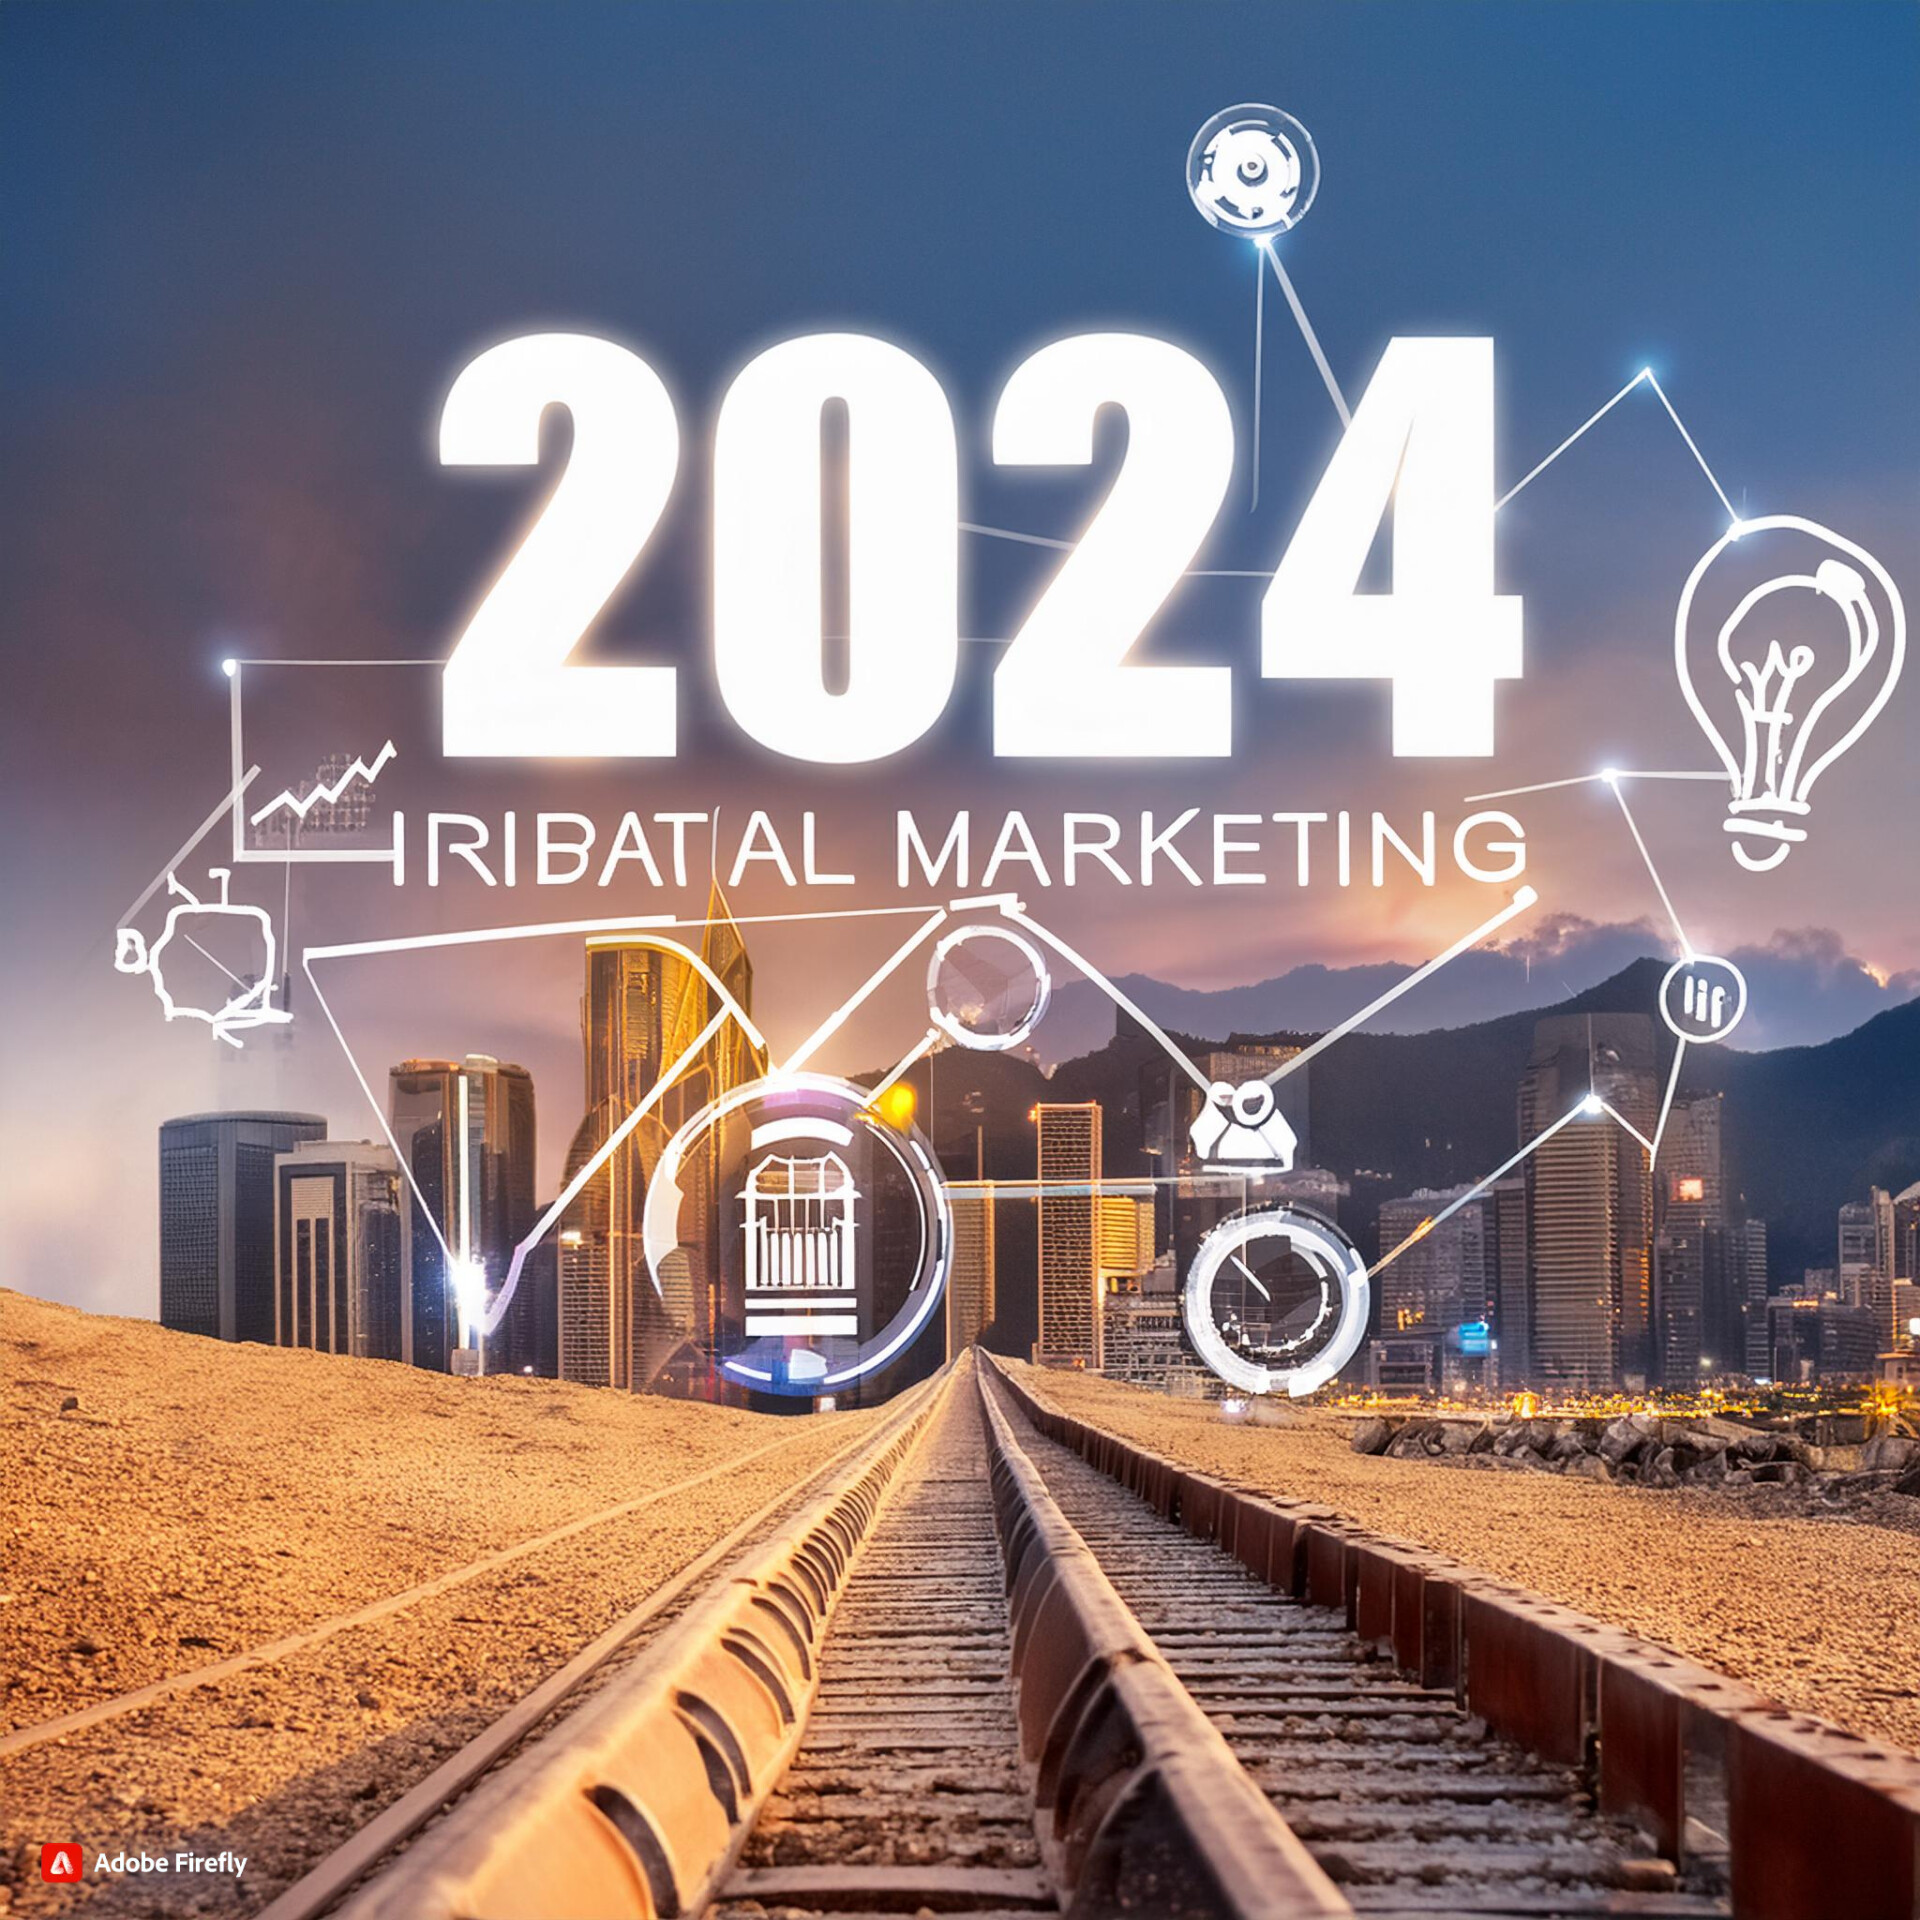 Innovative Digital Marketing Trends to Watch in 2024